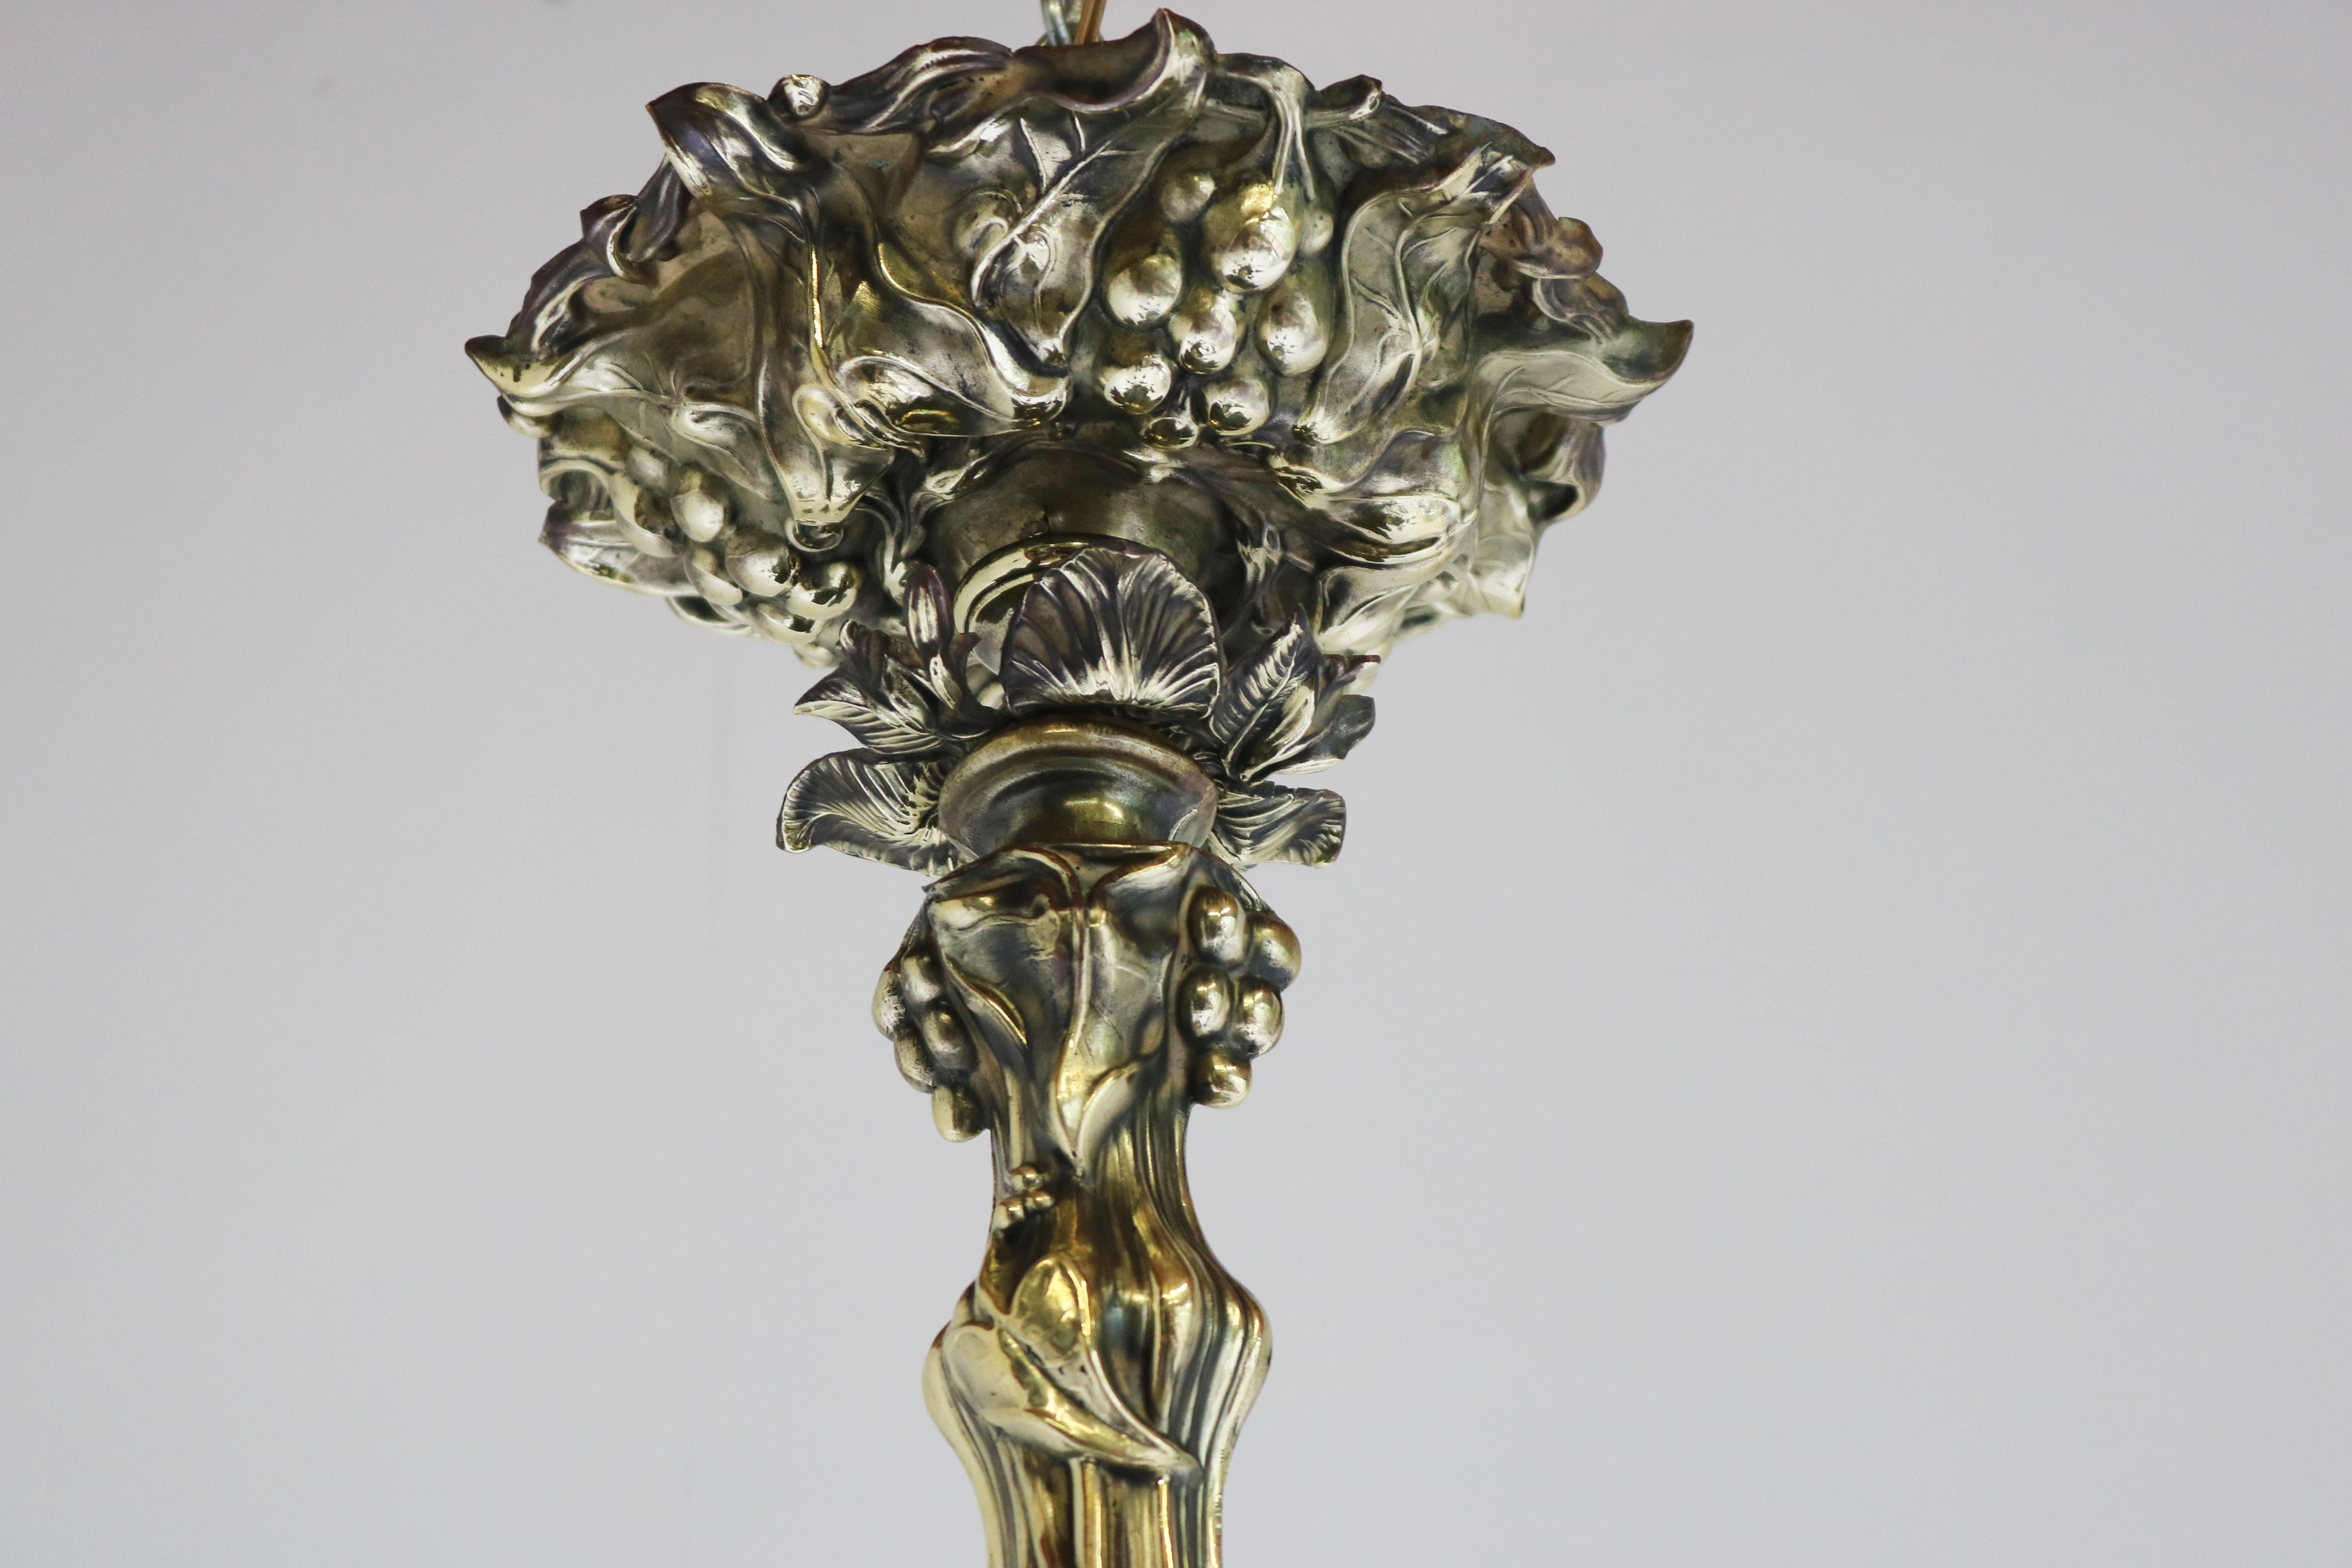 French Art Nouveau Hammered Brass Chandelier 1890 Antique 8 Lights Gold Floral For Sale 7